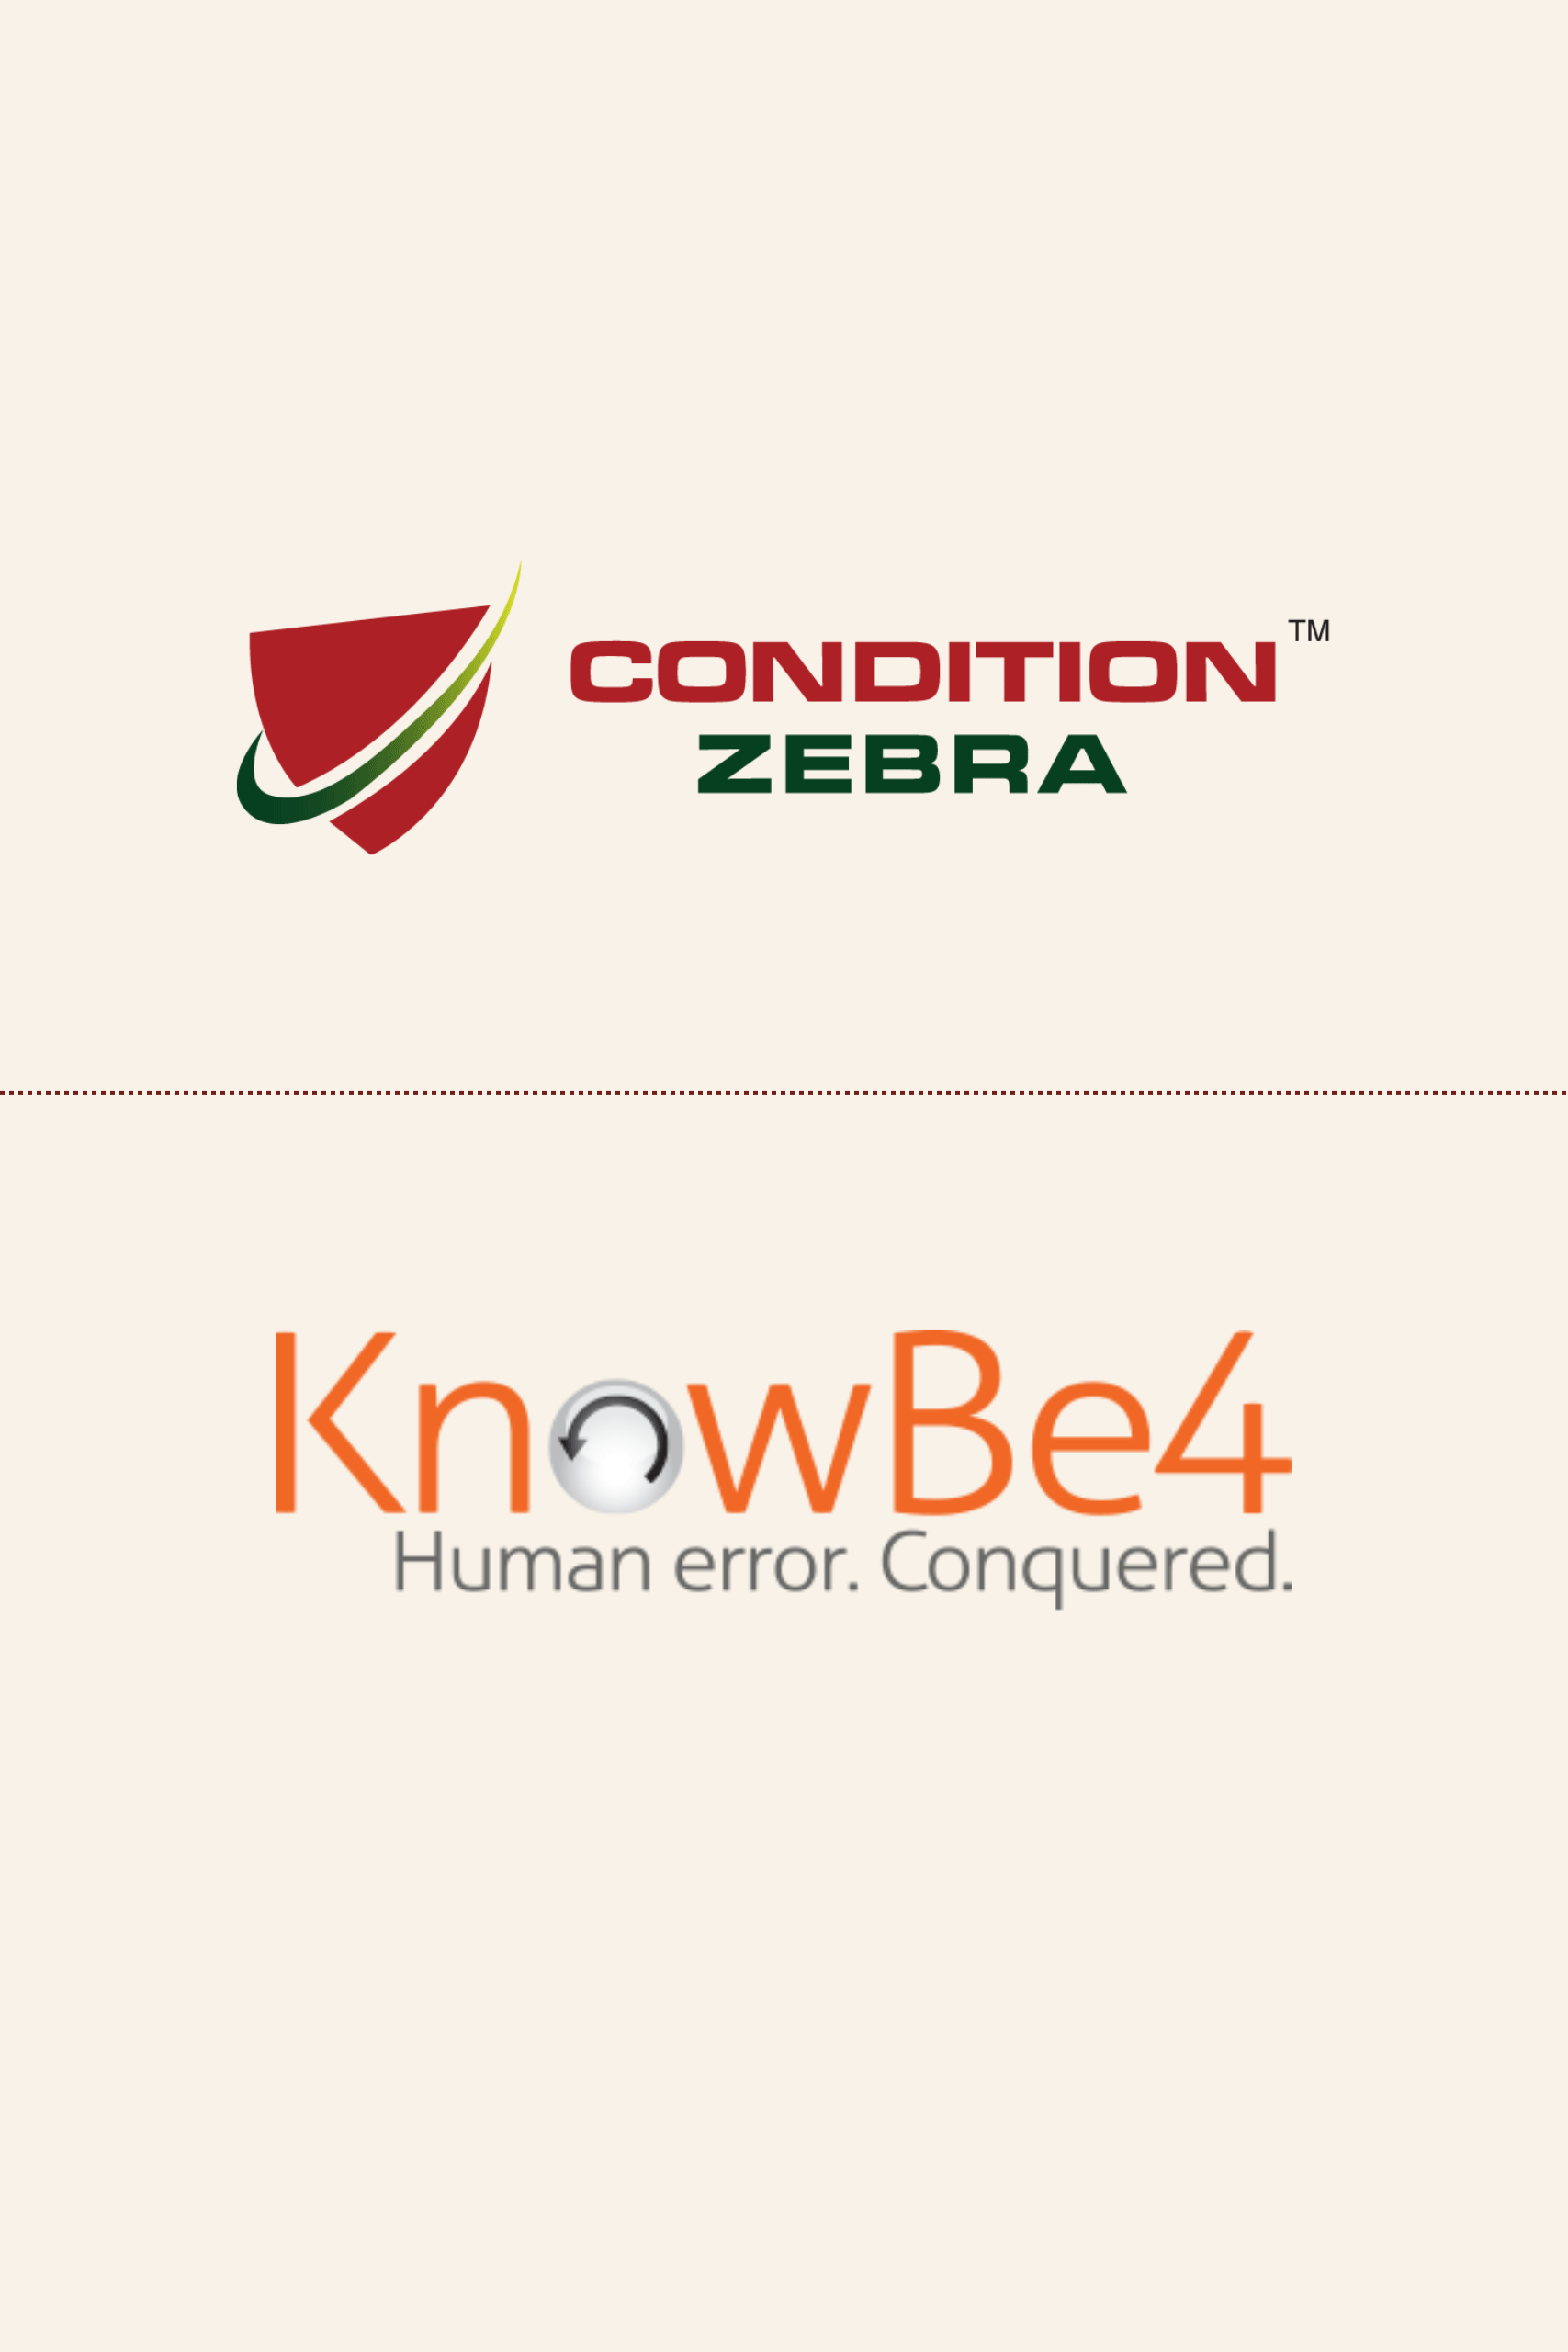 condition-zebra-knowbe4